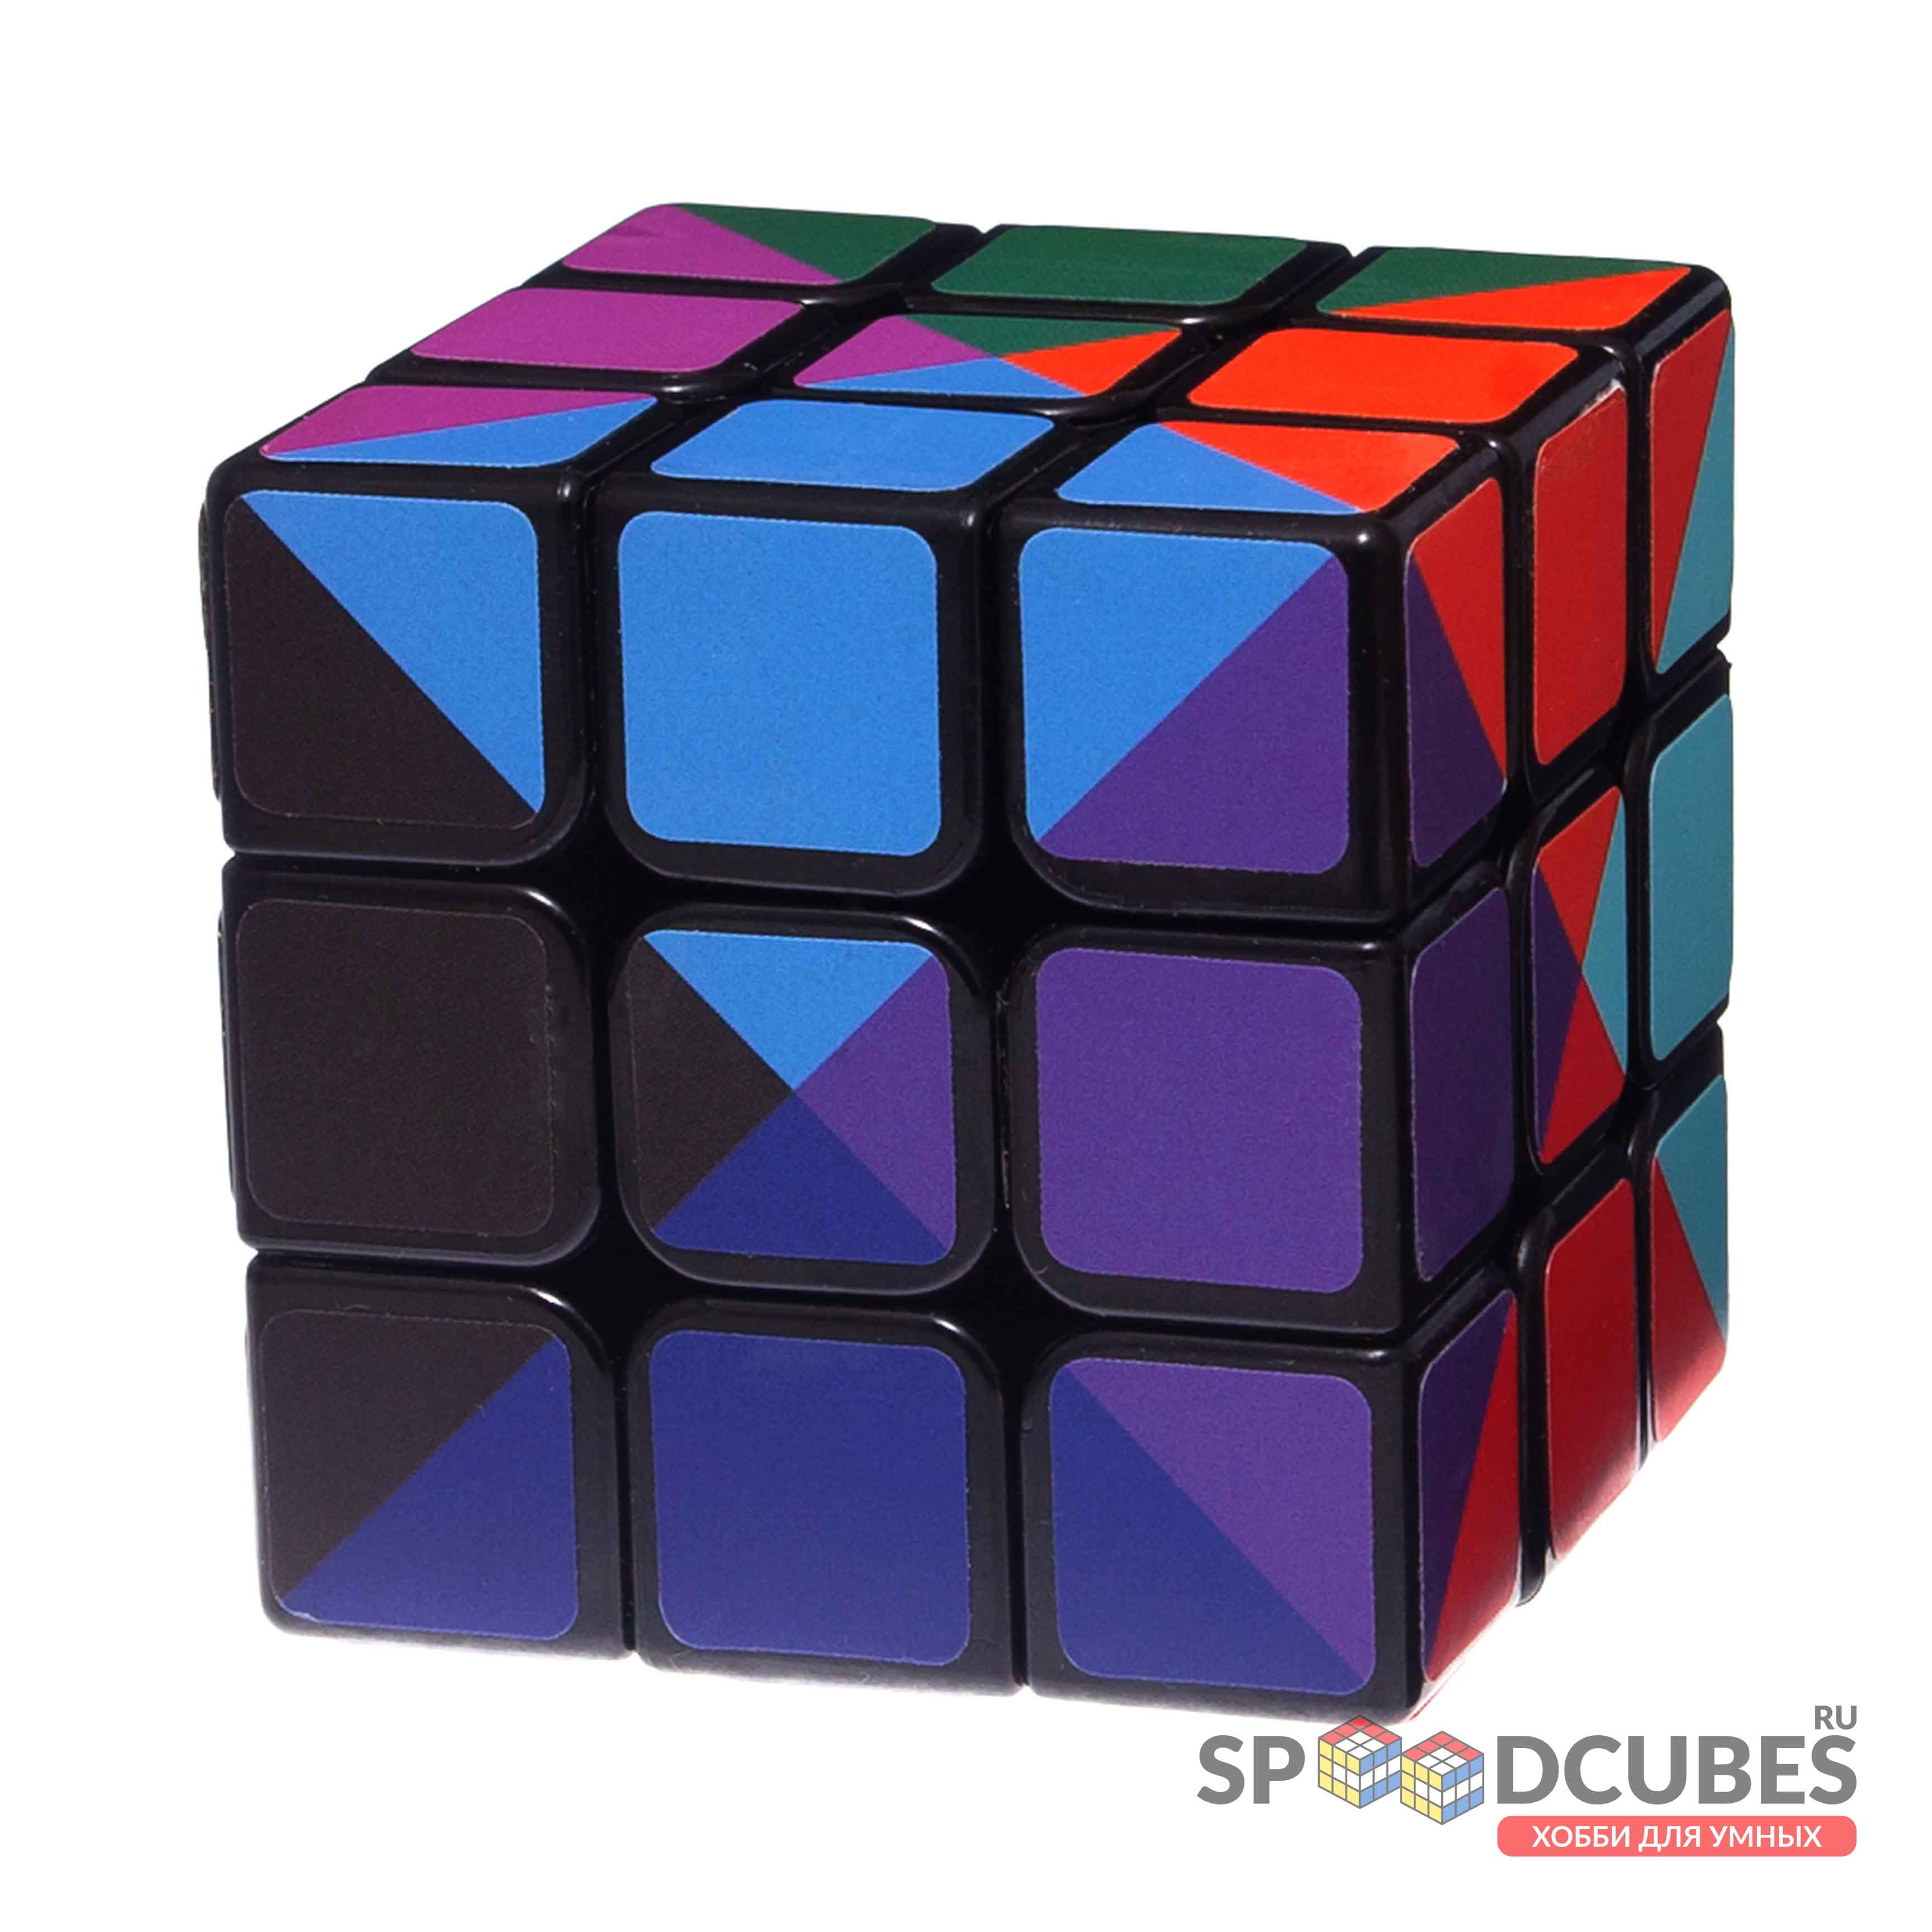 CubeTwist 3x3 Super Difficult